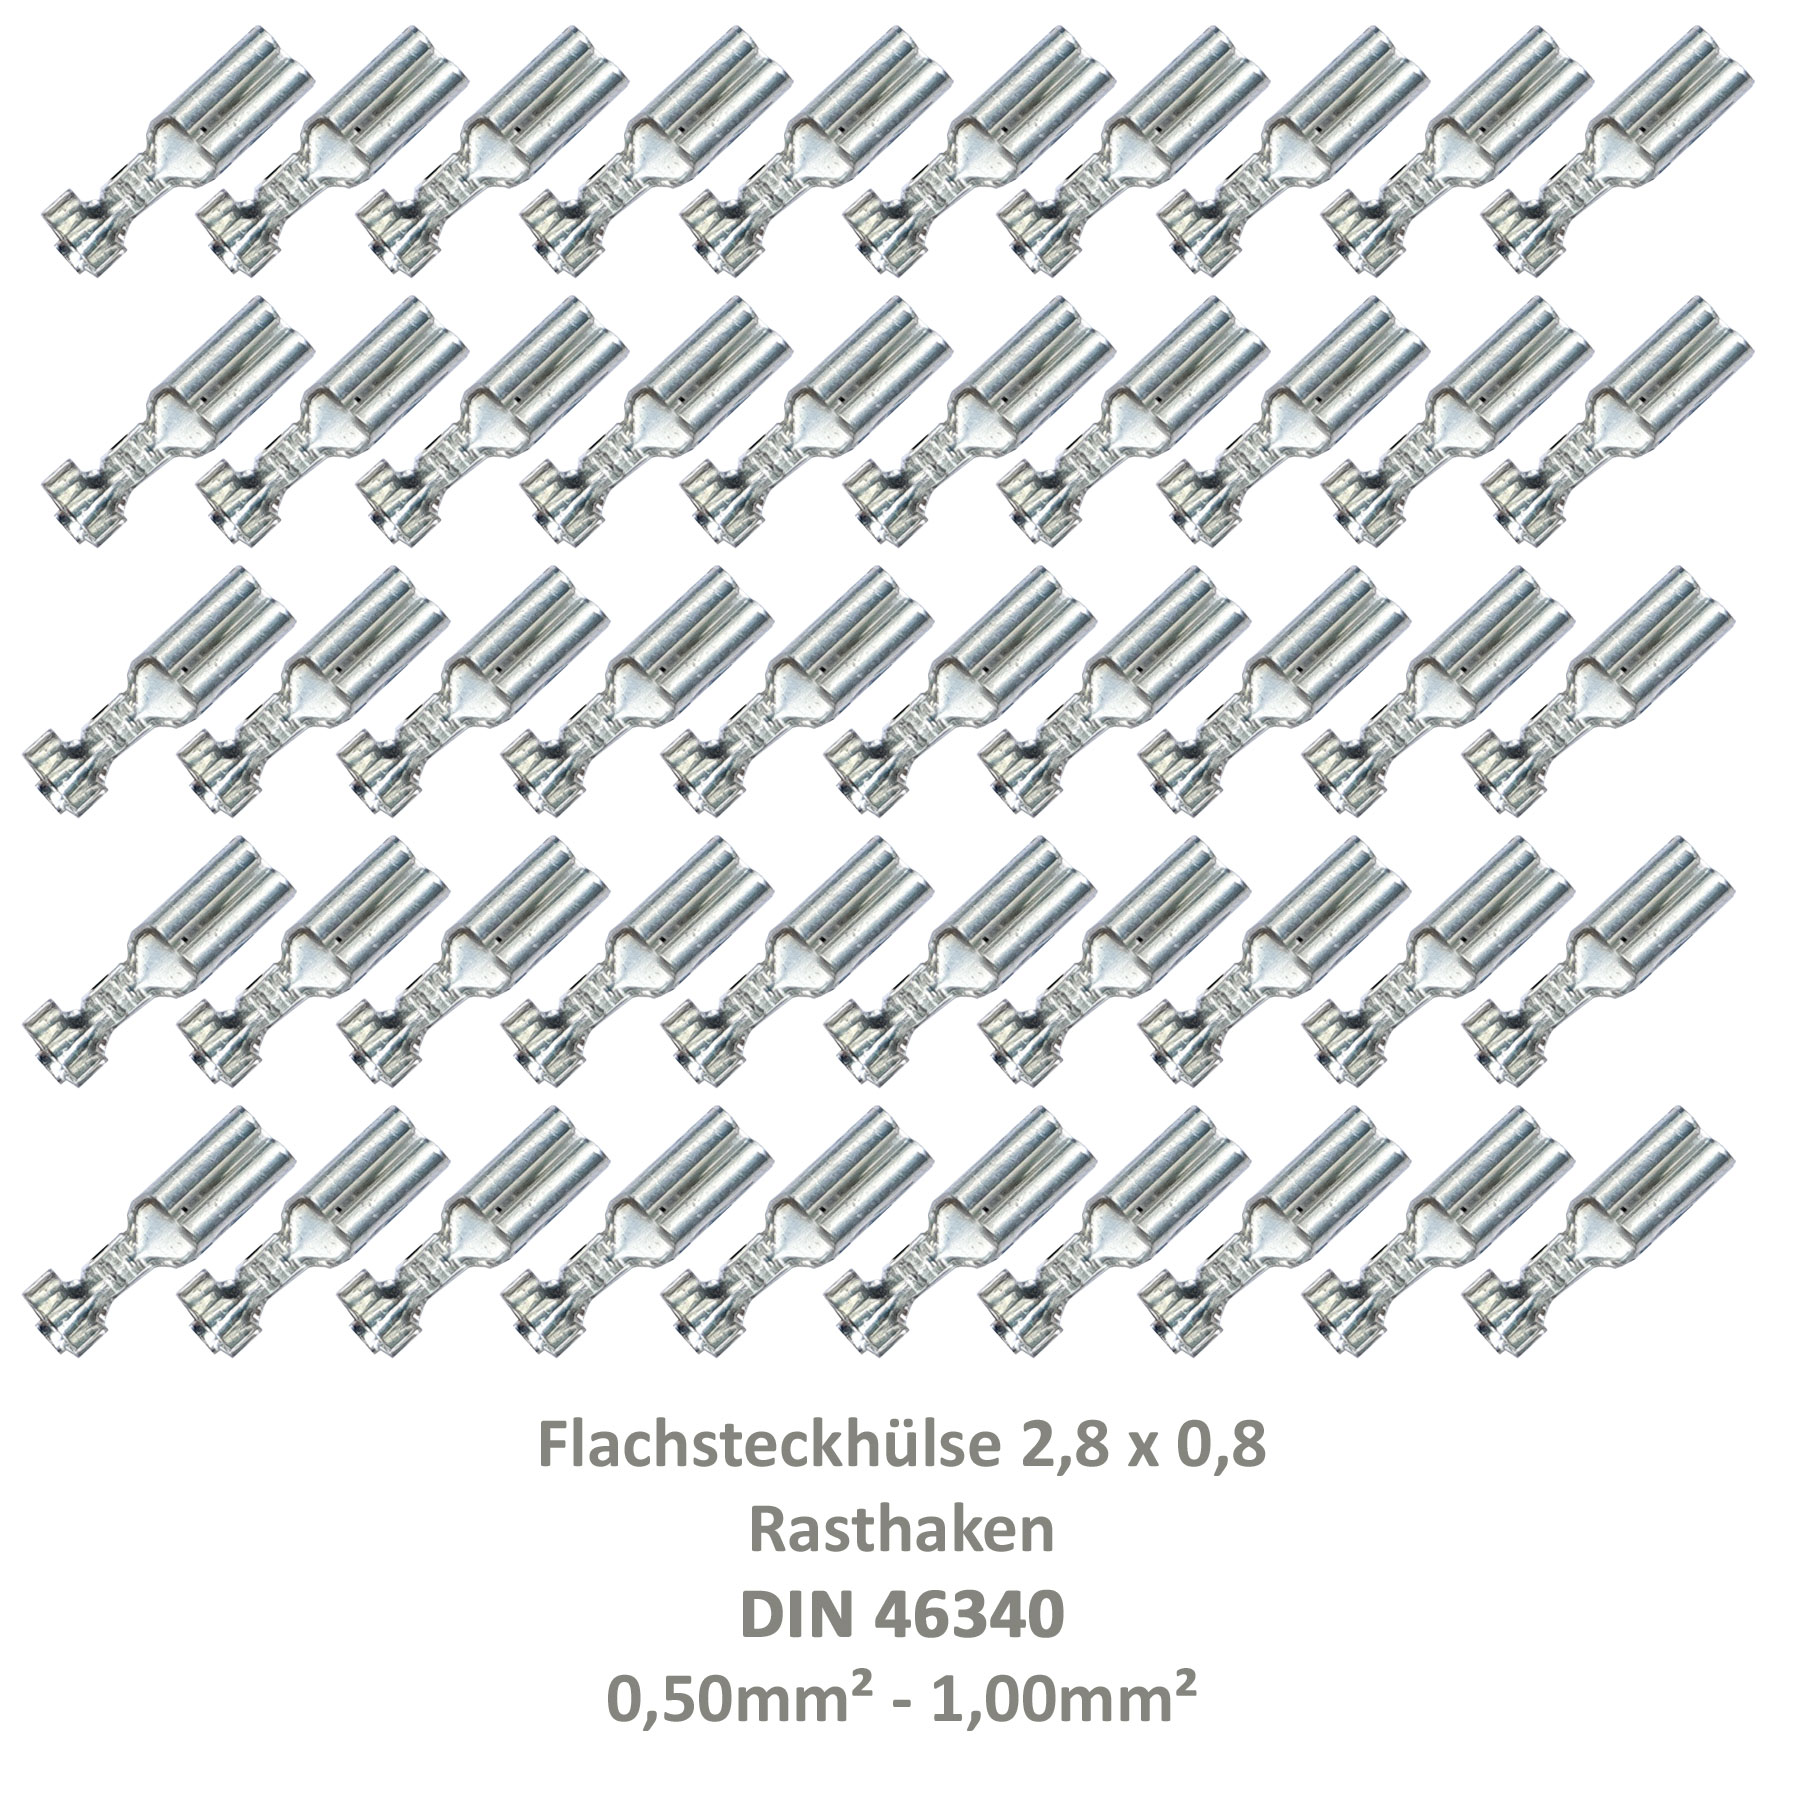 50 Flachsteckhülse 6,3x0,8 Kabelschuh unisoliert 4,00²-6,00² DIN 46340 Rasthaken